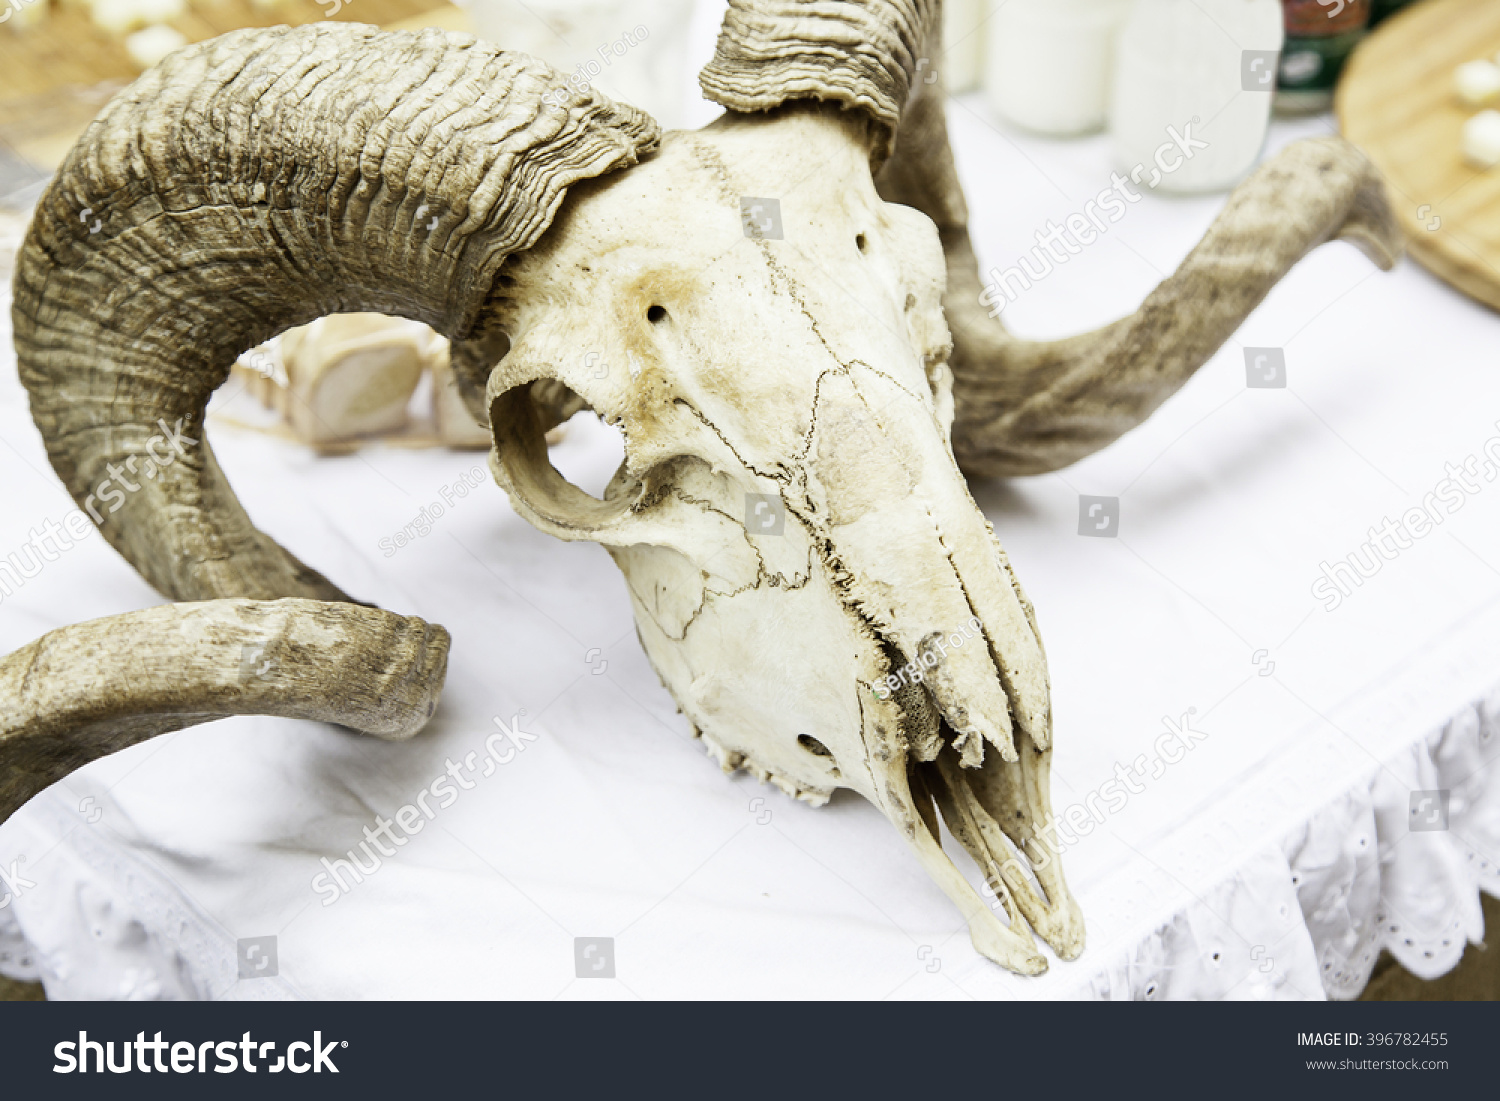 stock-photo-goat-skull-with-horns-detail